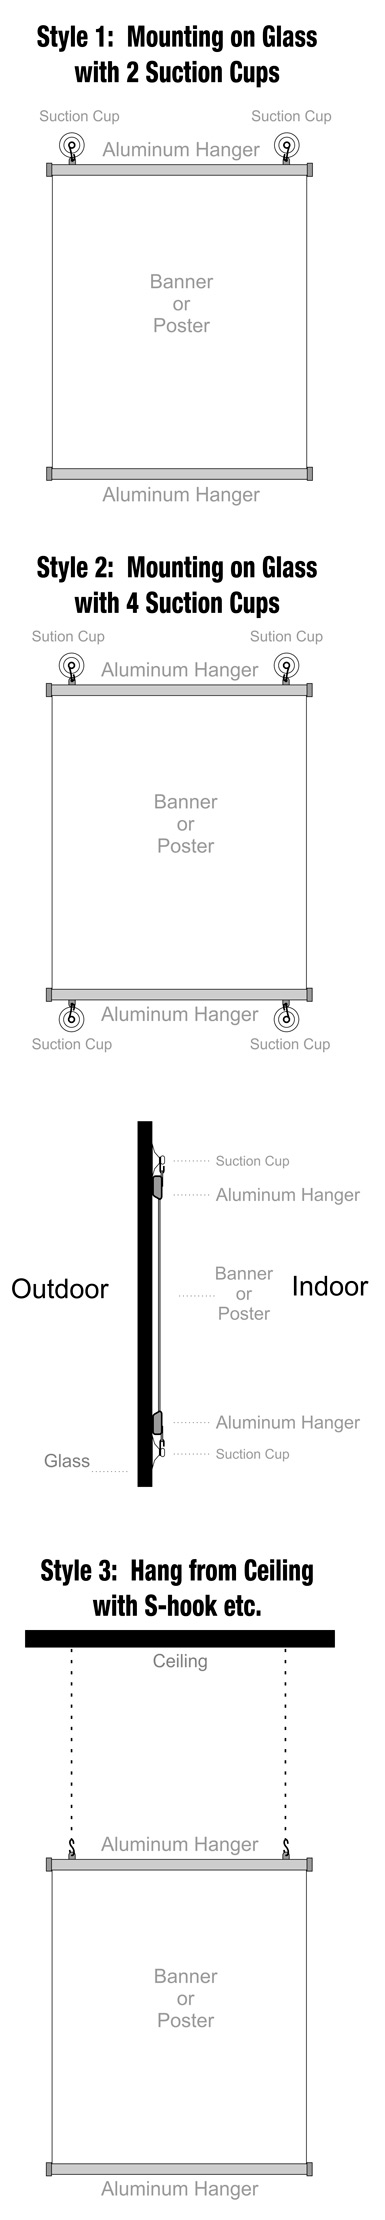 Comment accrocher aluminium Hanger